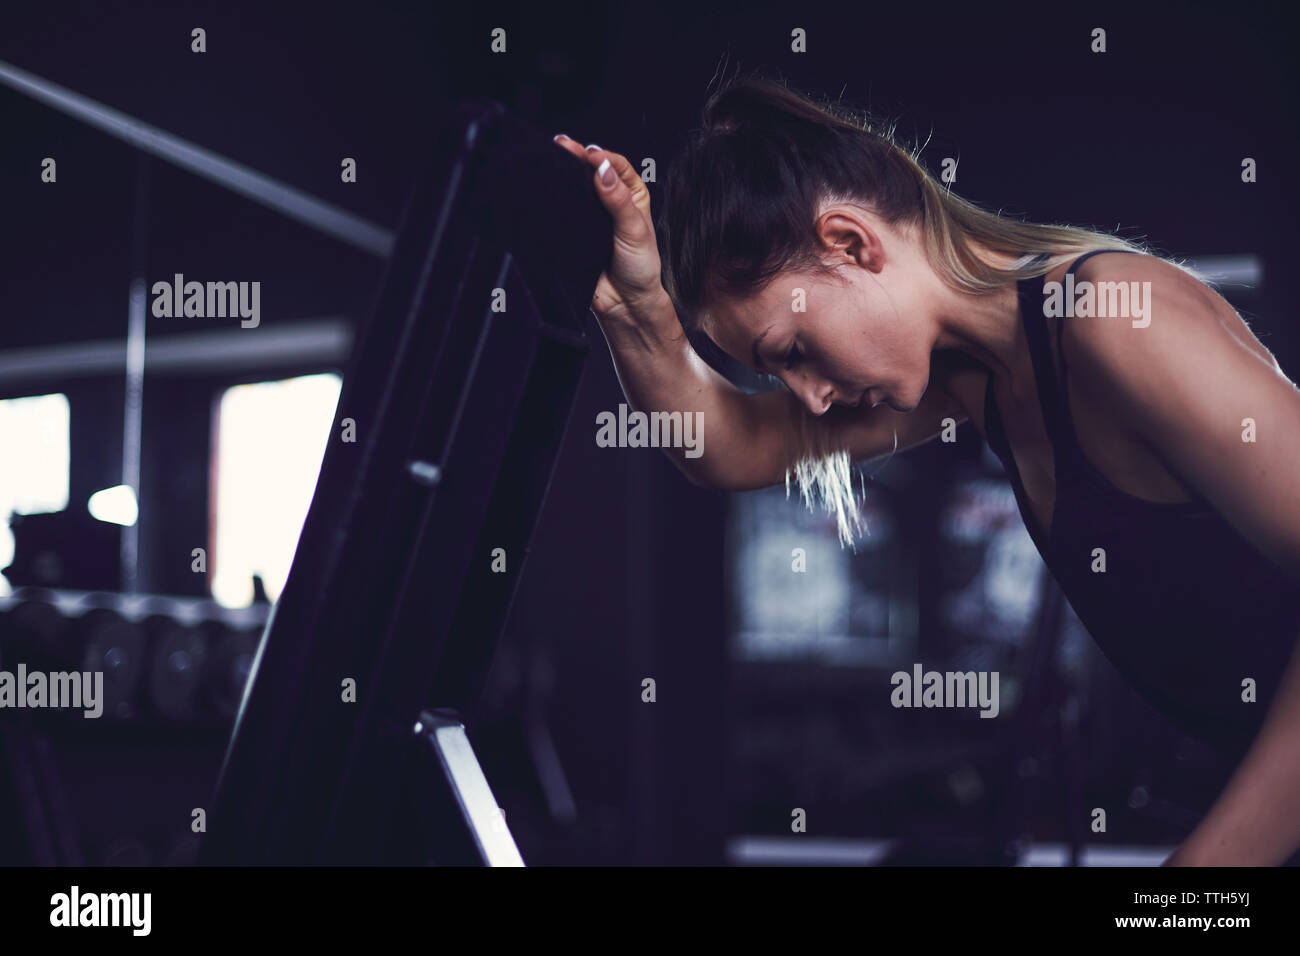 Junge Frau ruht im Fitnesscenter nach Übung Stockfoto